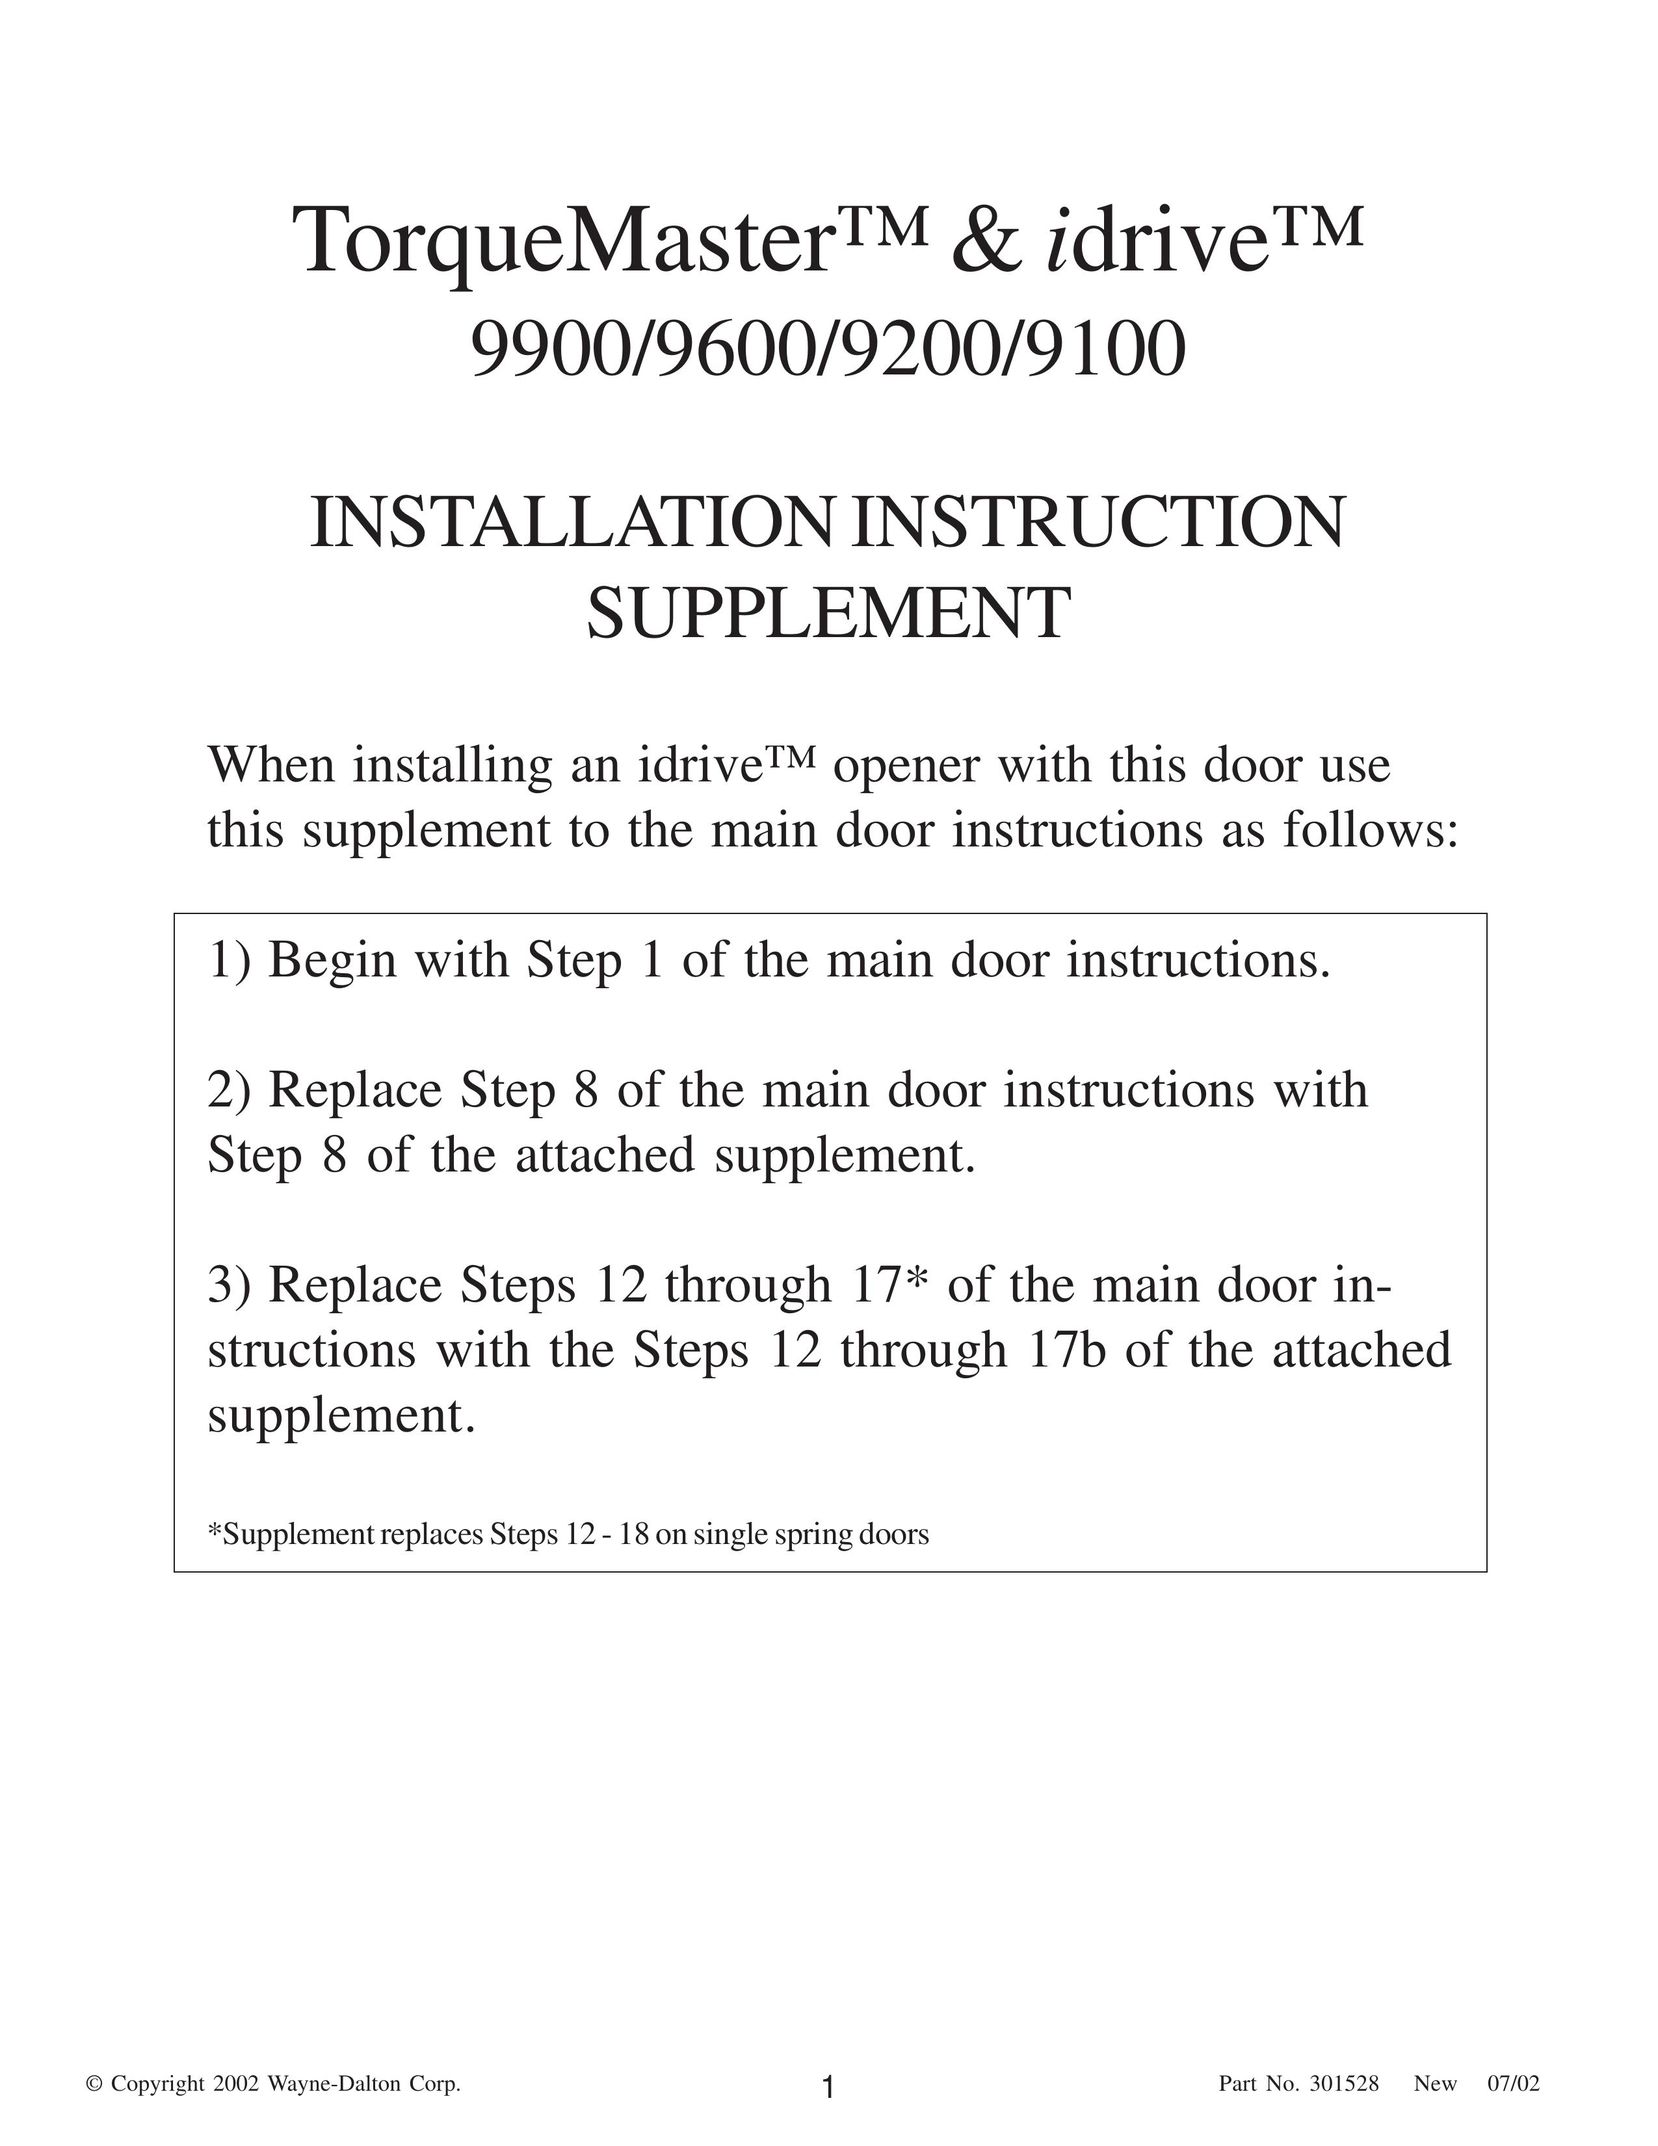 Wayne-Dalton 9100 Door User Manual